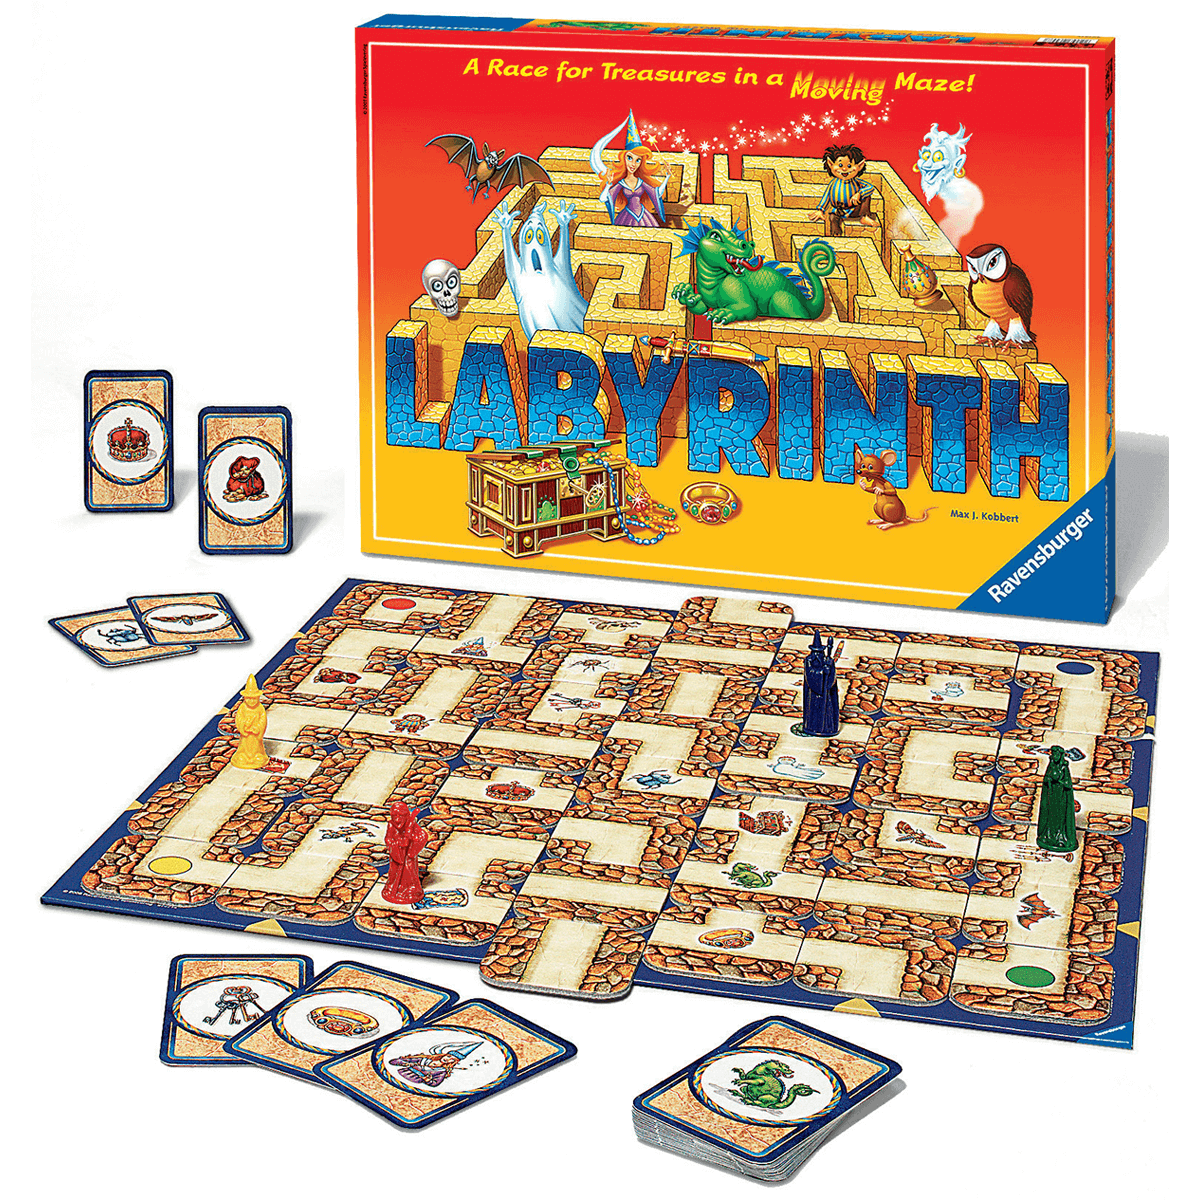 The Labyrinth board game. Image via Ravensburger.